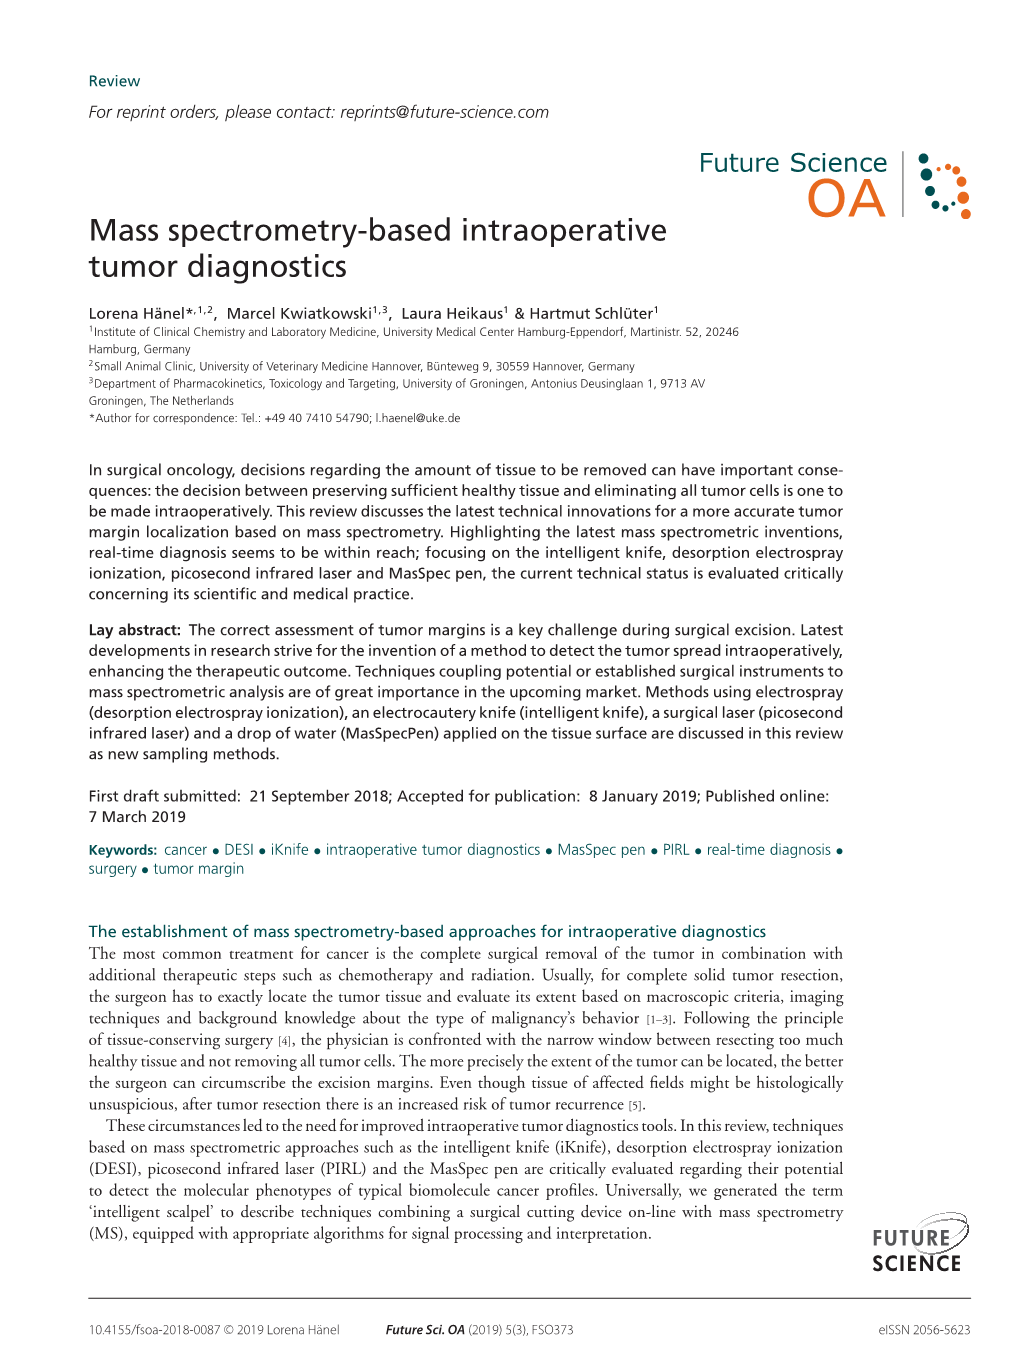 Mass Spectrometry-Based Intraoperative Tumor Diagnostics